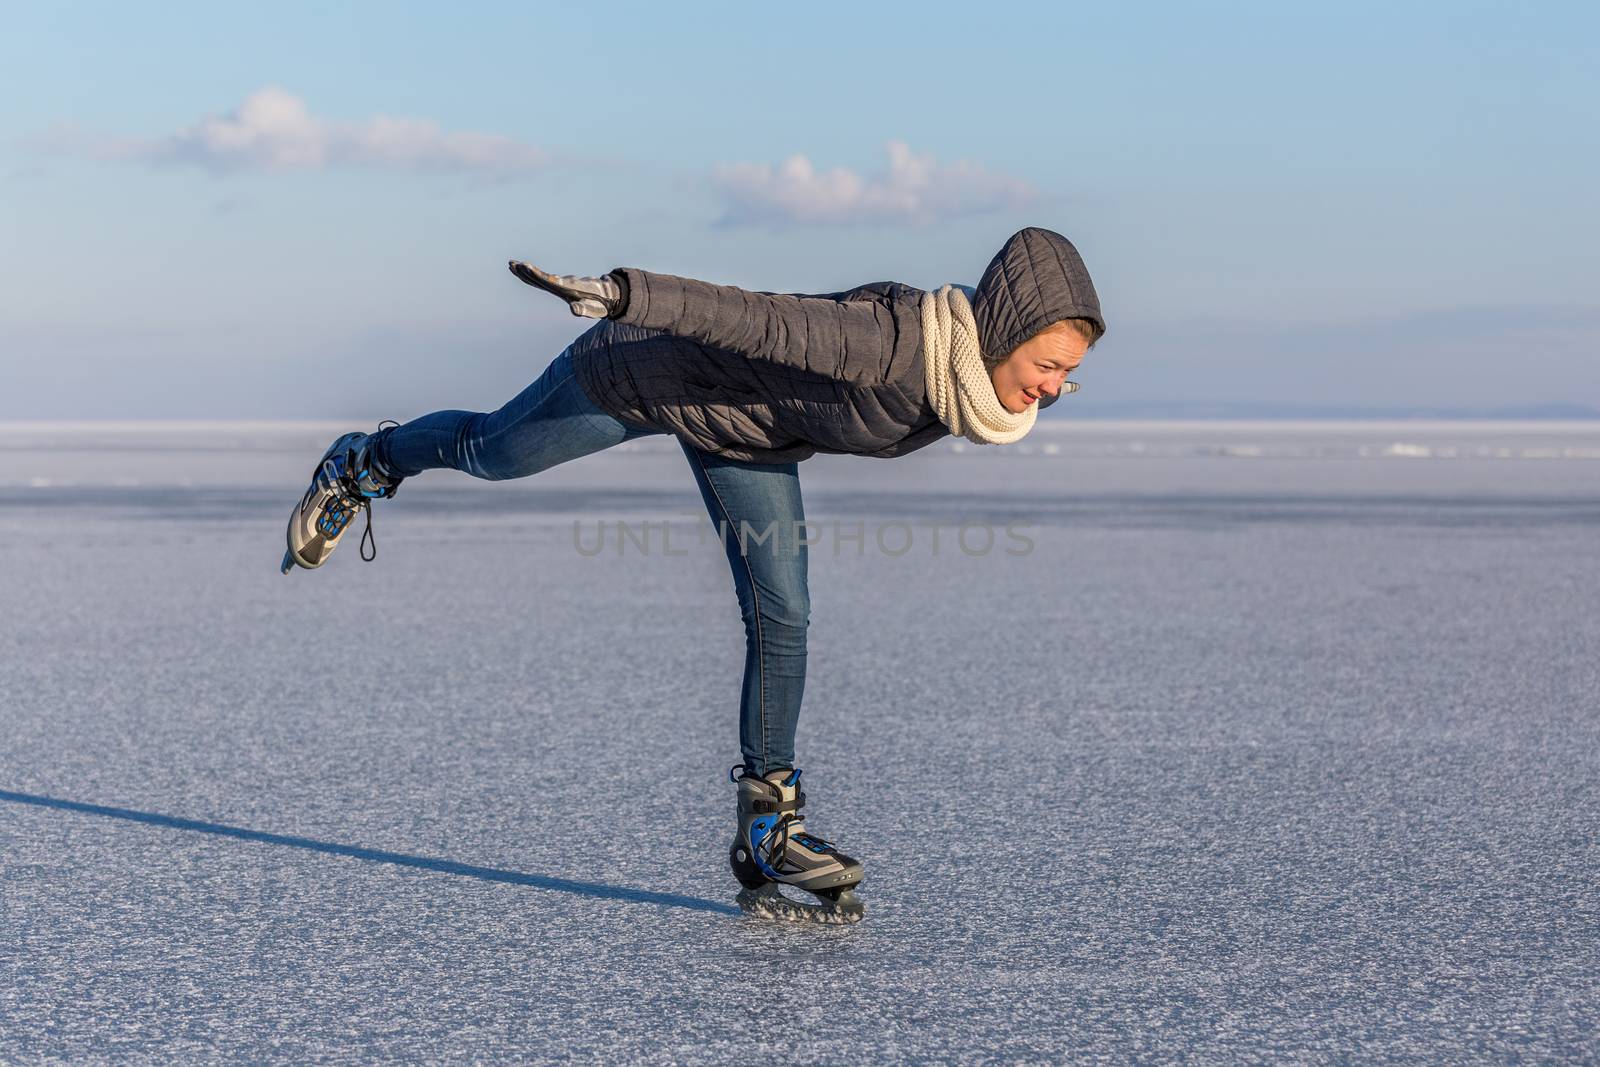 Young girl skating on Lake Balaton in Hungary